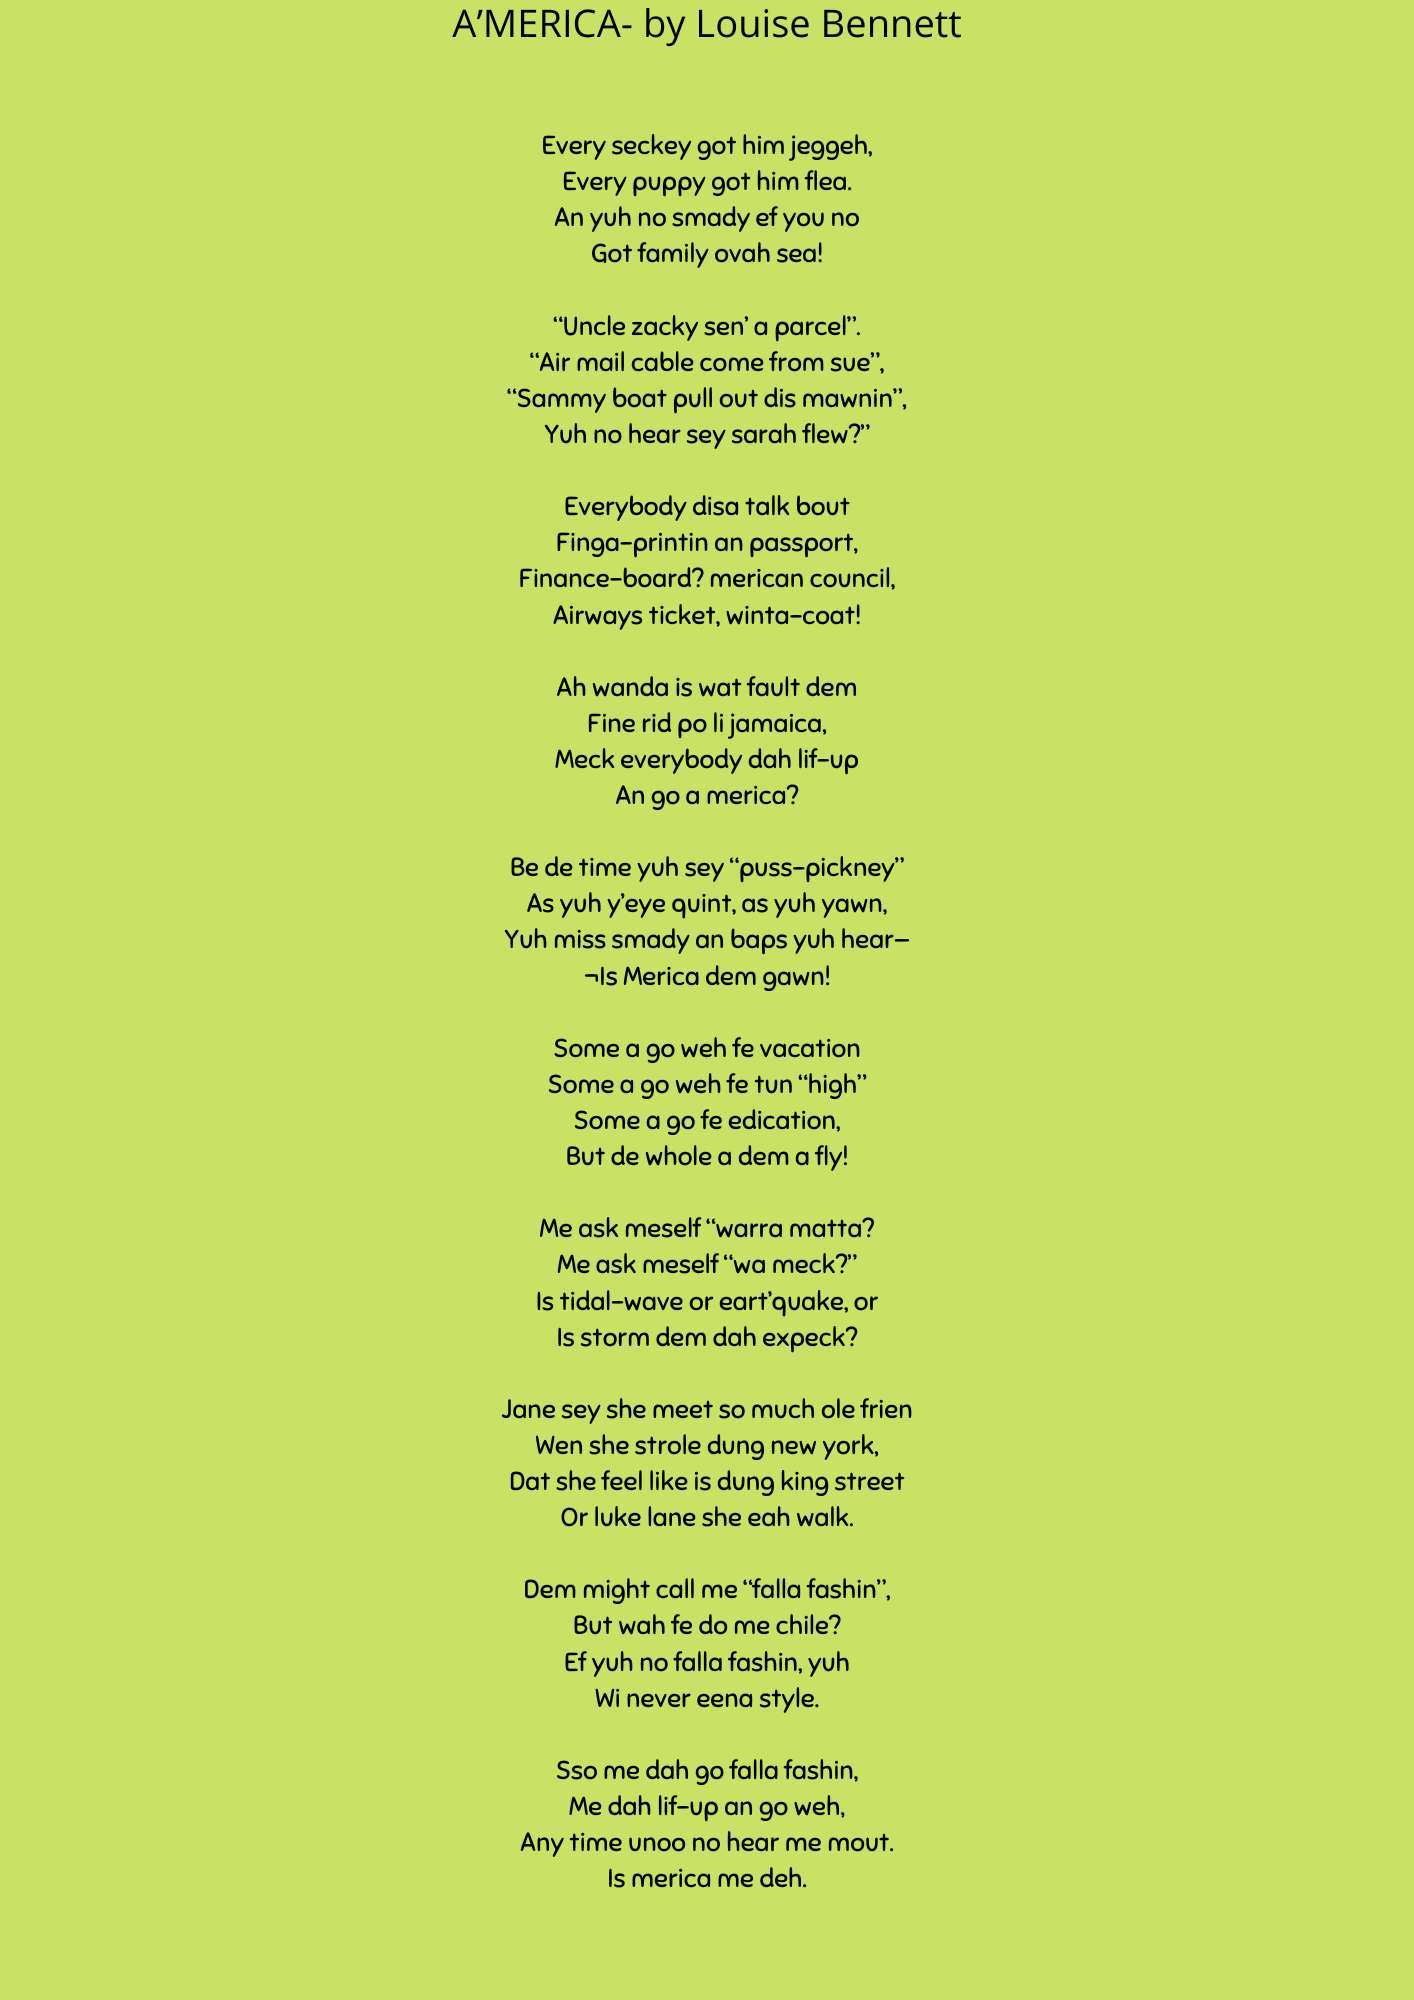 louise bennett jamaica language poem